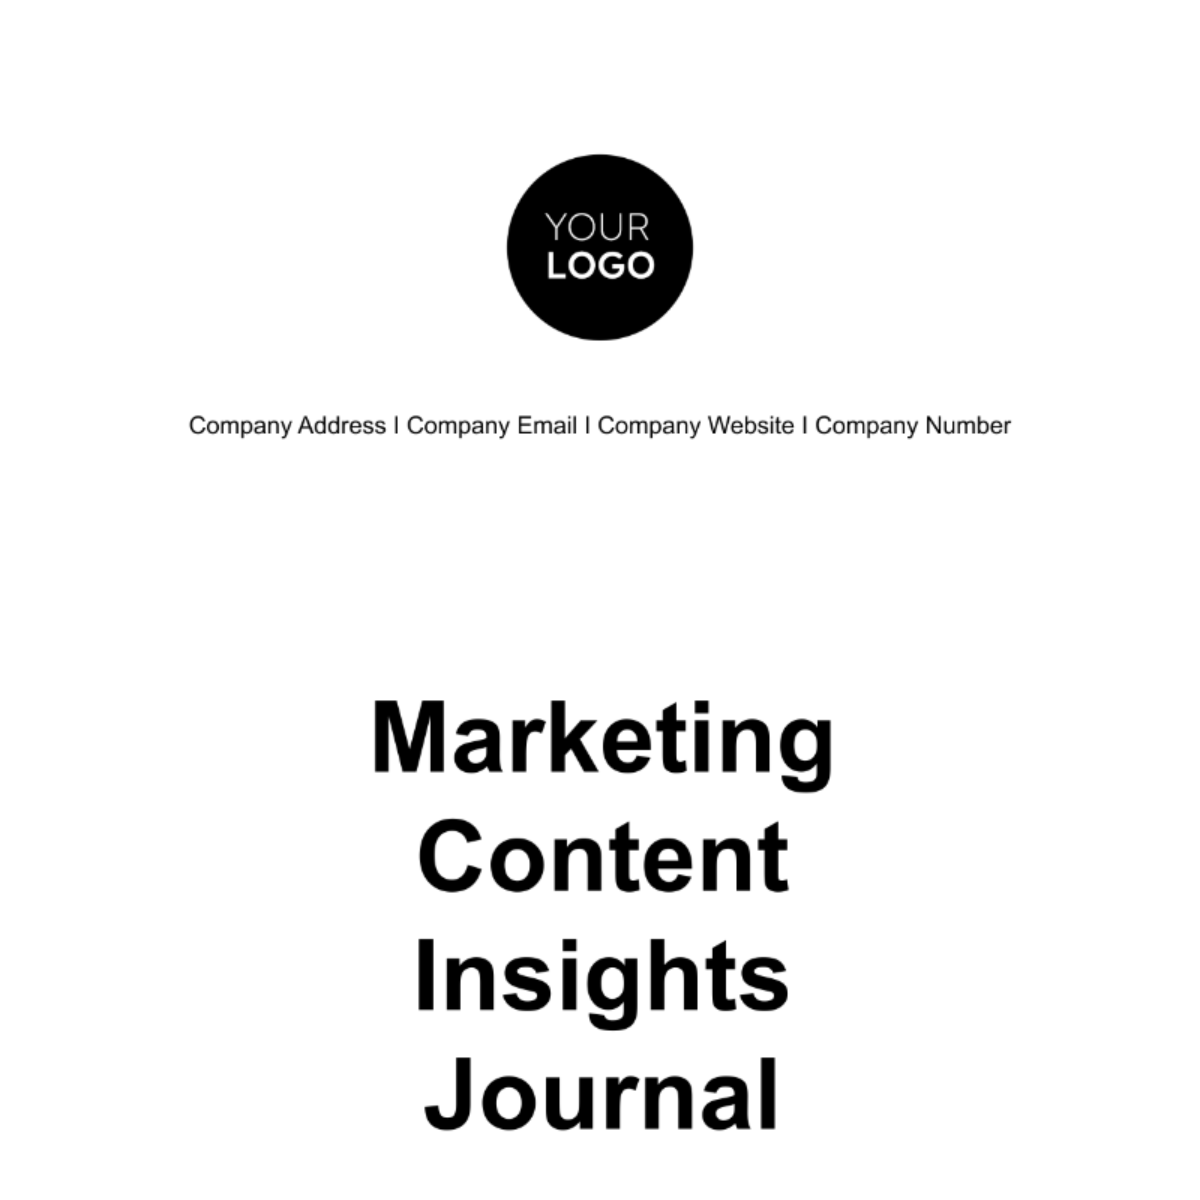 Marketing Content Insights Journal Template